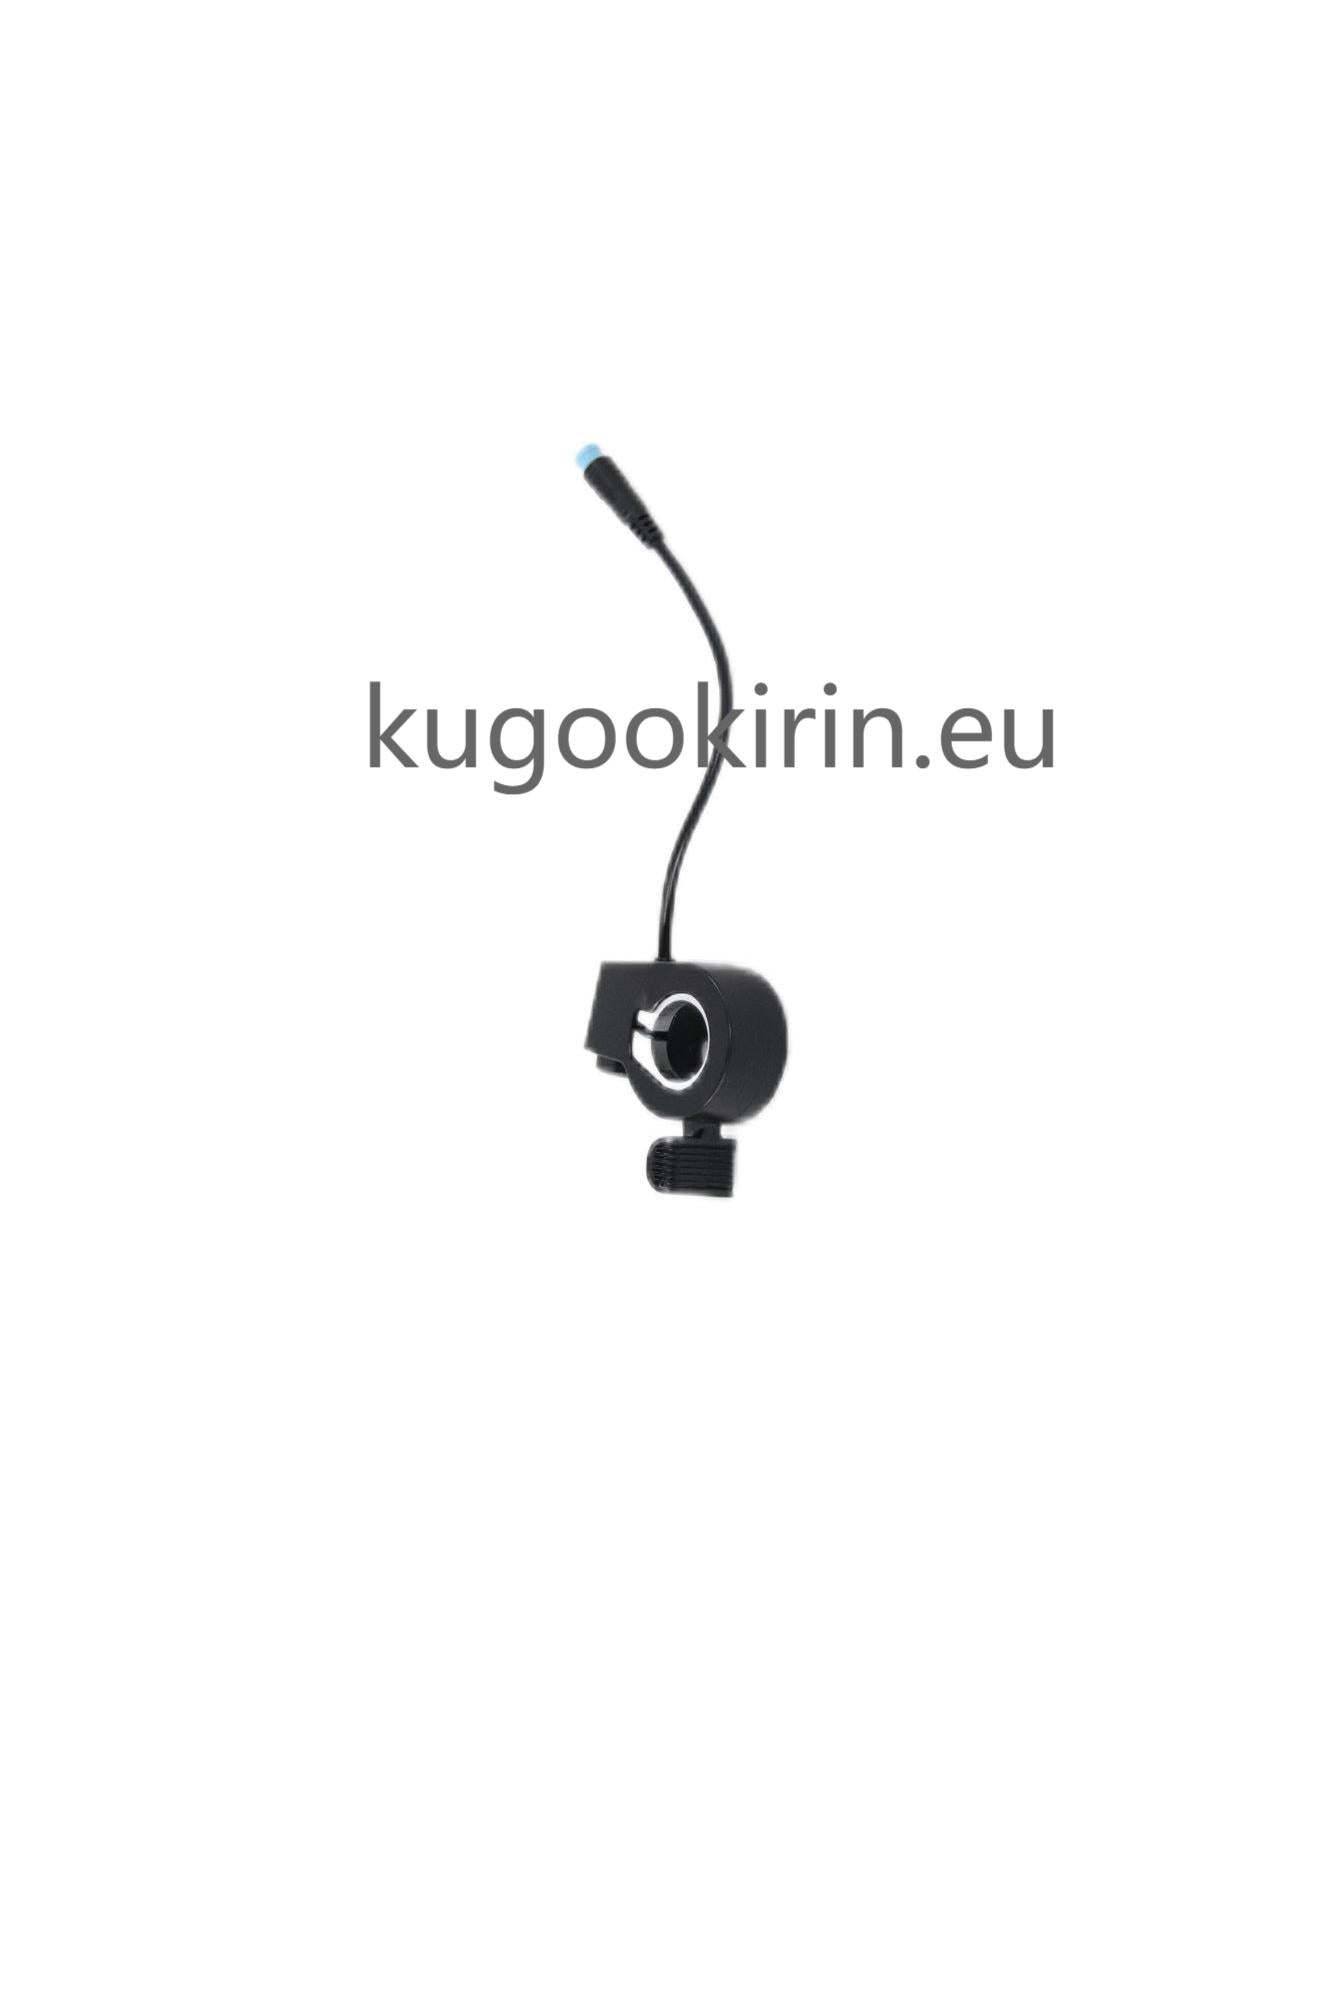 Leva Acceleratore Originale per Kugoo KuKirin G3 Pro